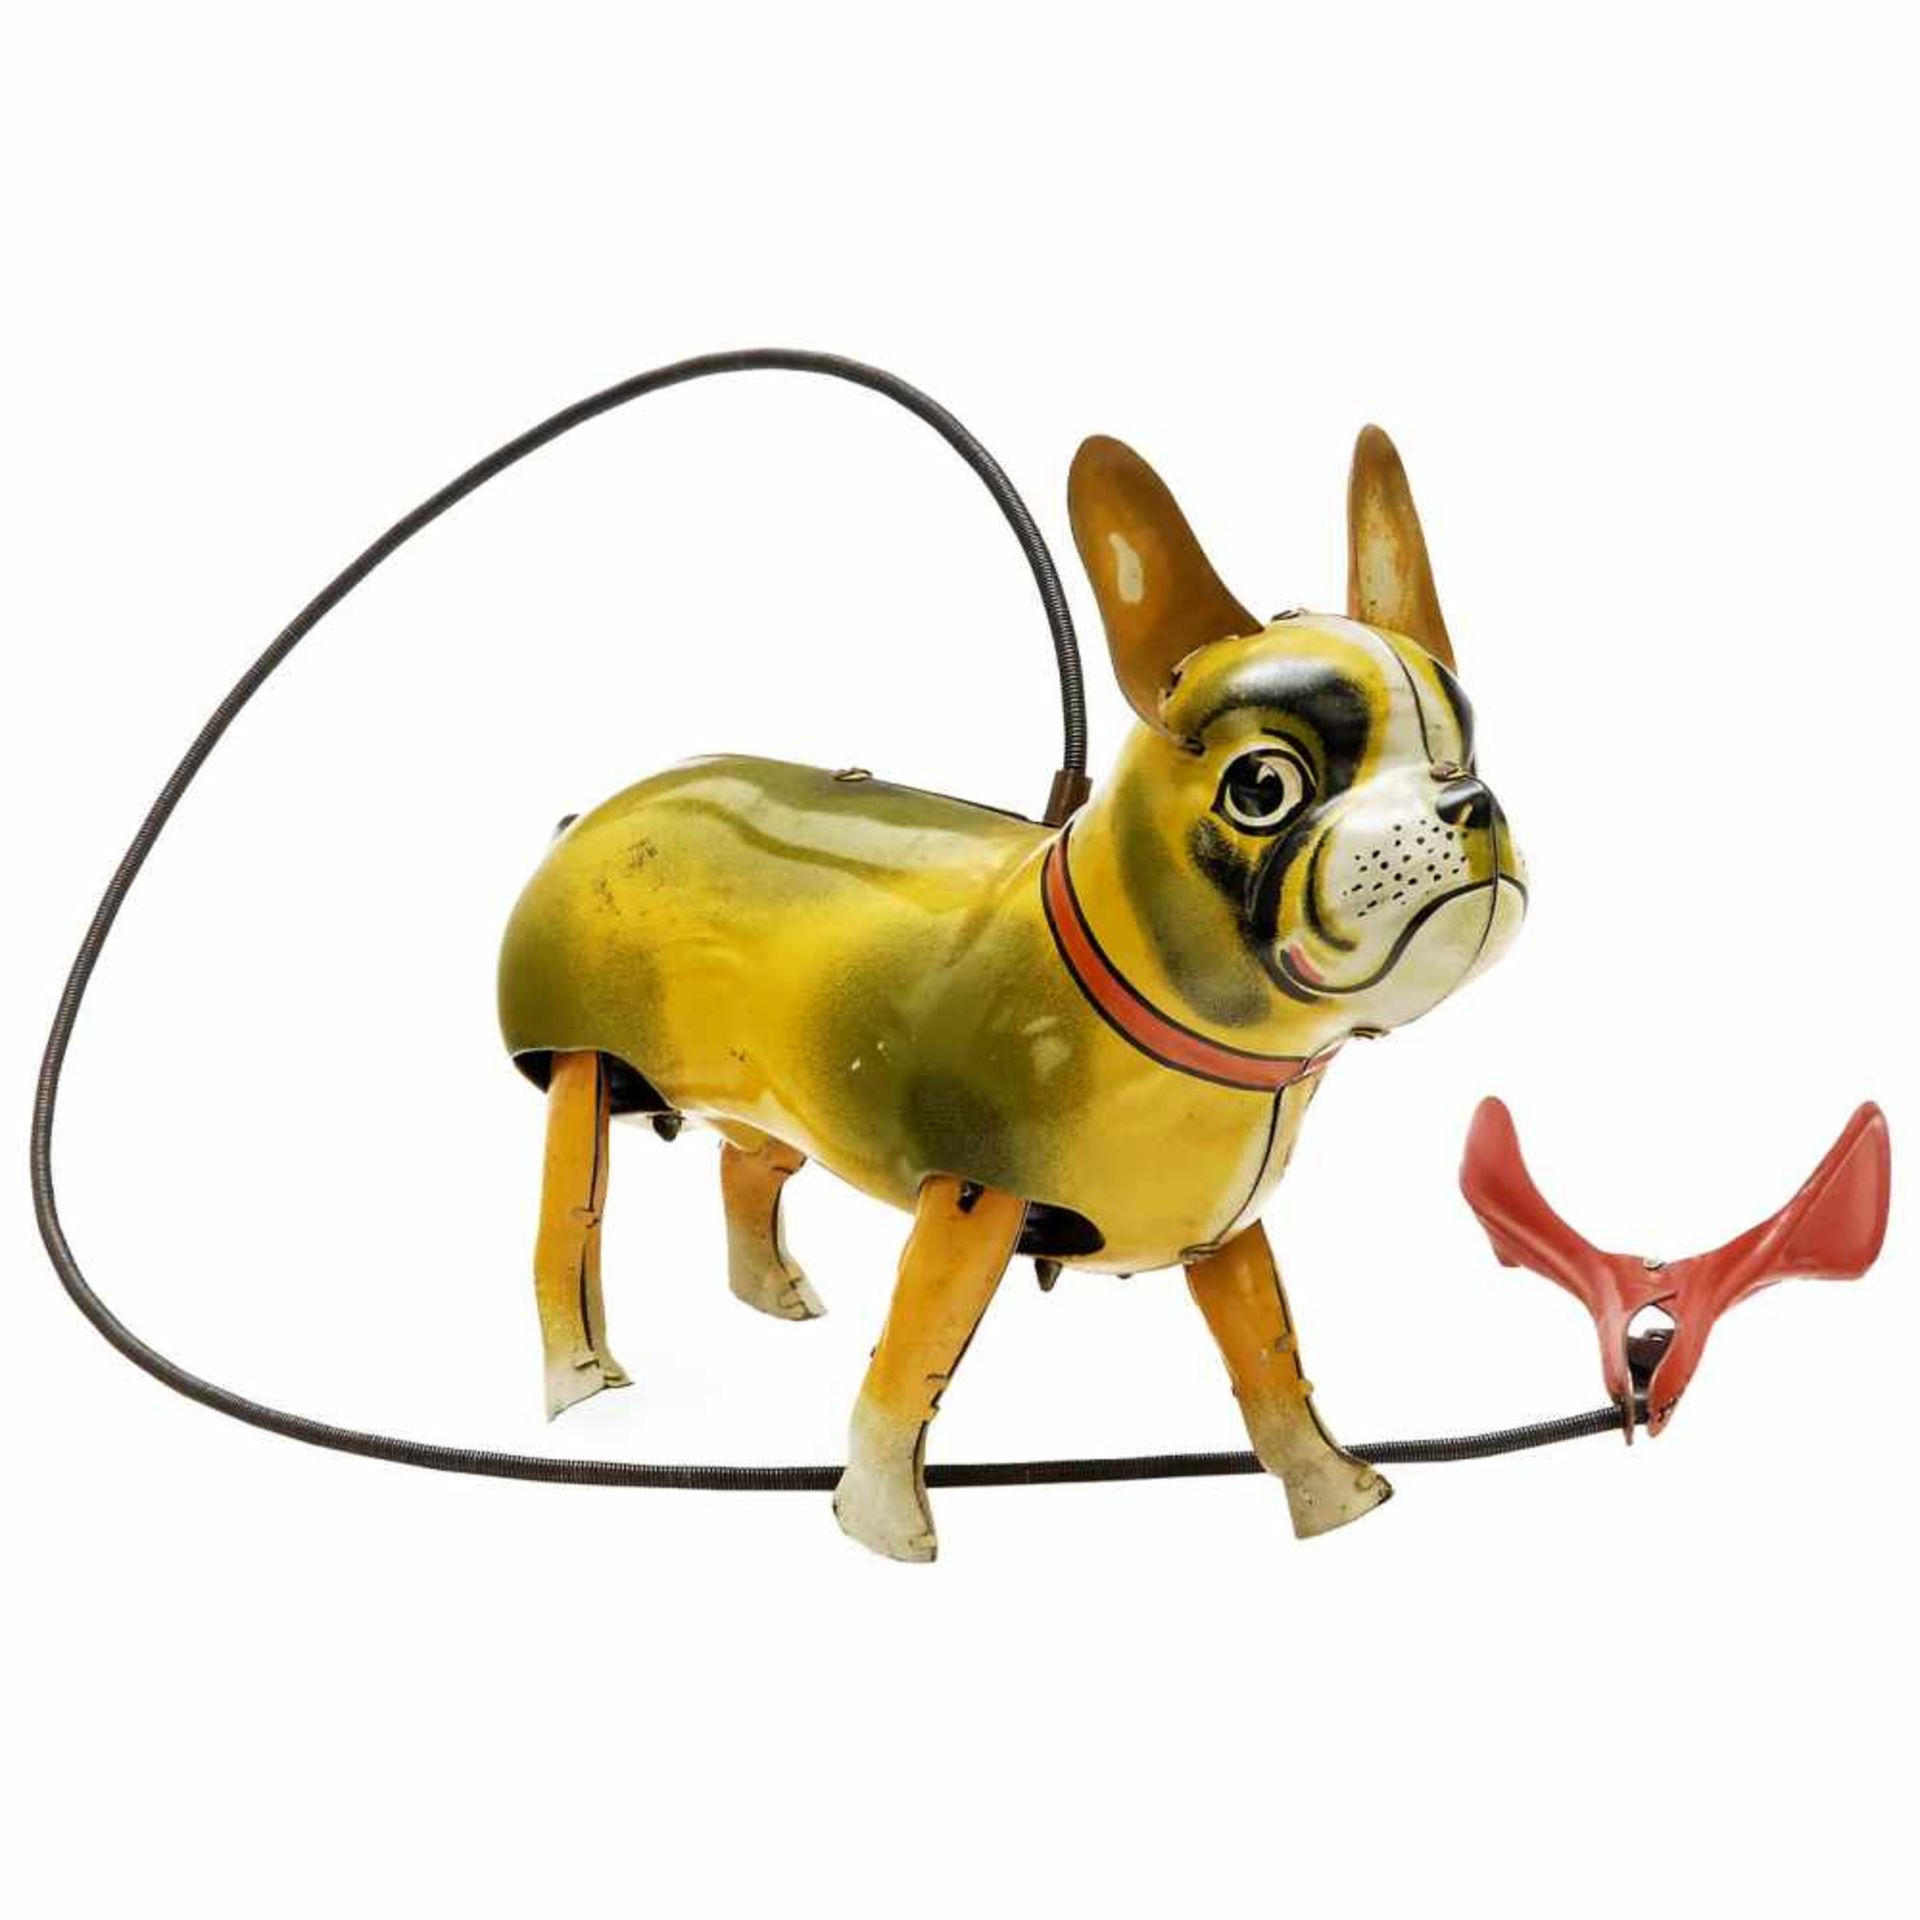 Walking Bulldog Toy by Blomer & Schüler, c. 1955Nuremberg, Germany. Lithographed tin, remote-